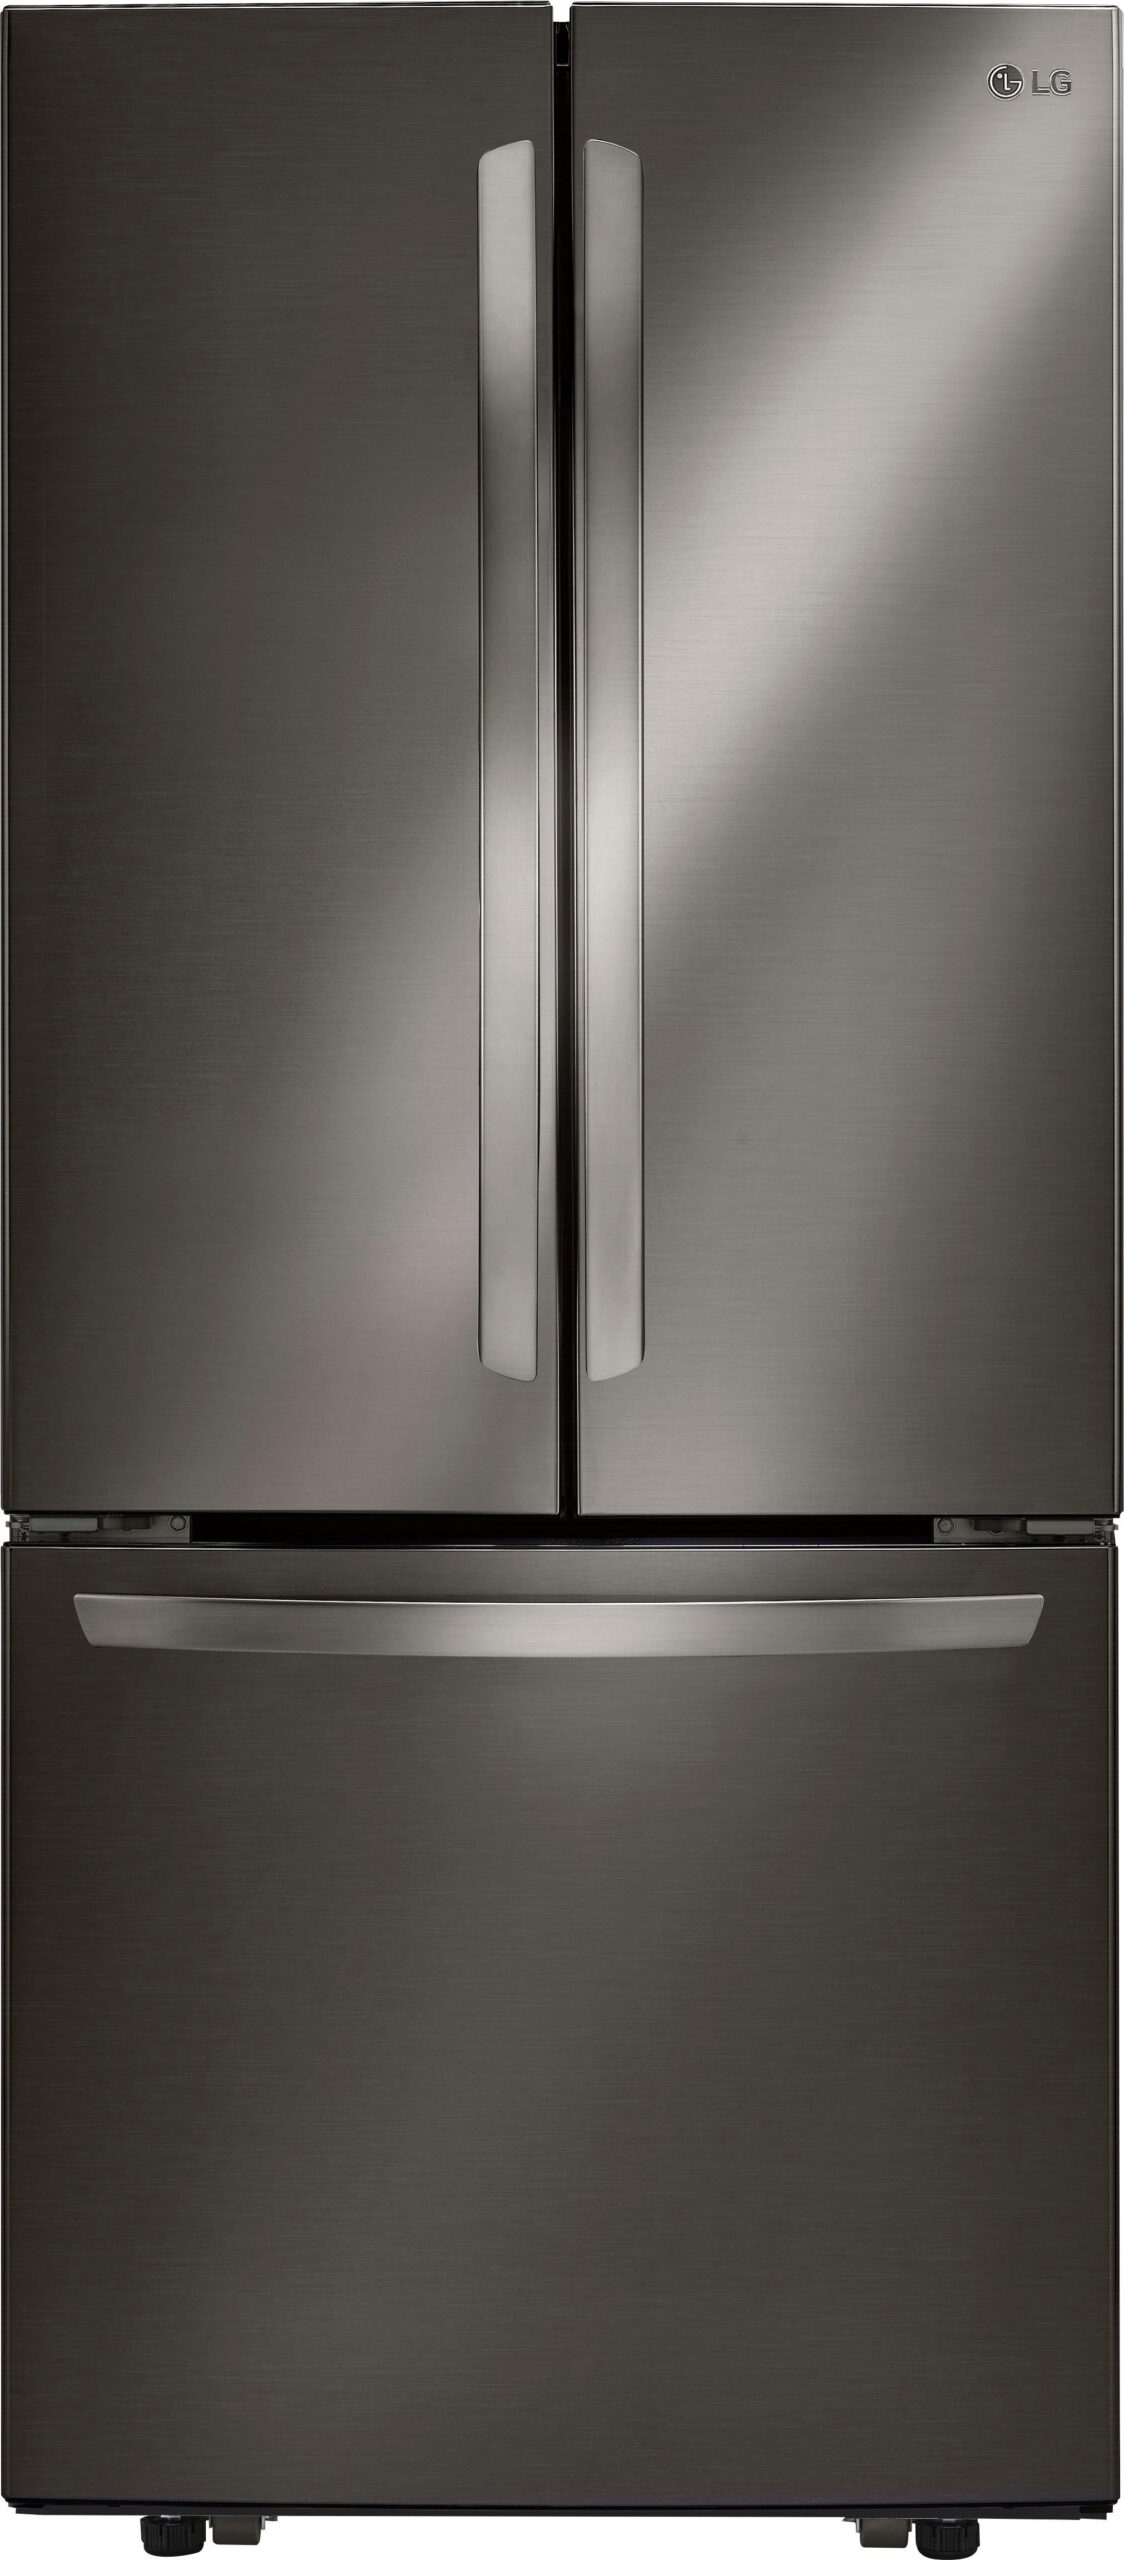 LG Electronics 21.8 cu. ft. French Door Refrigerator: Best black French door refrigerator